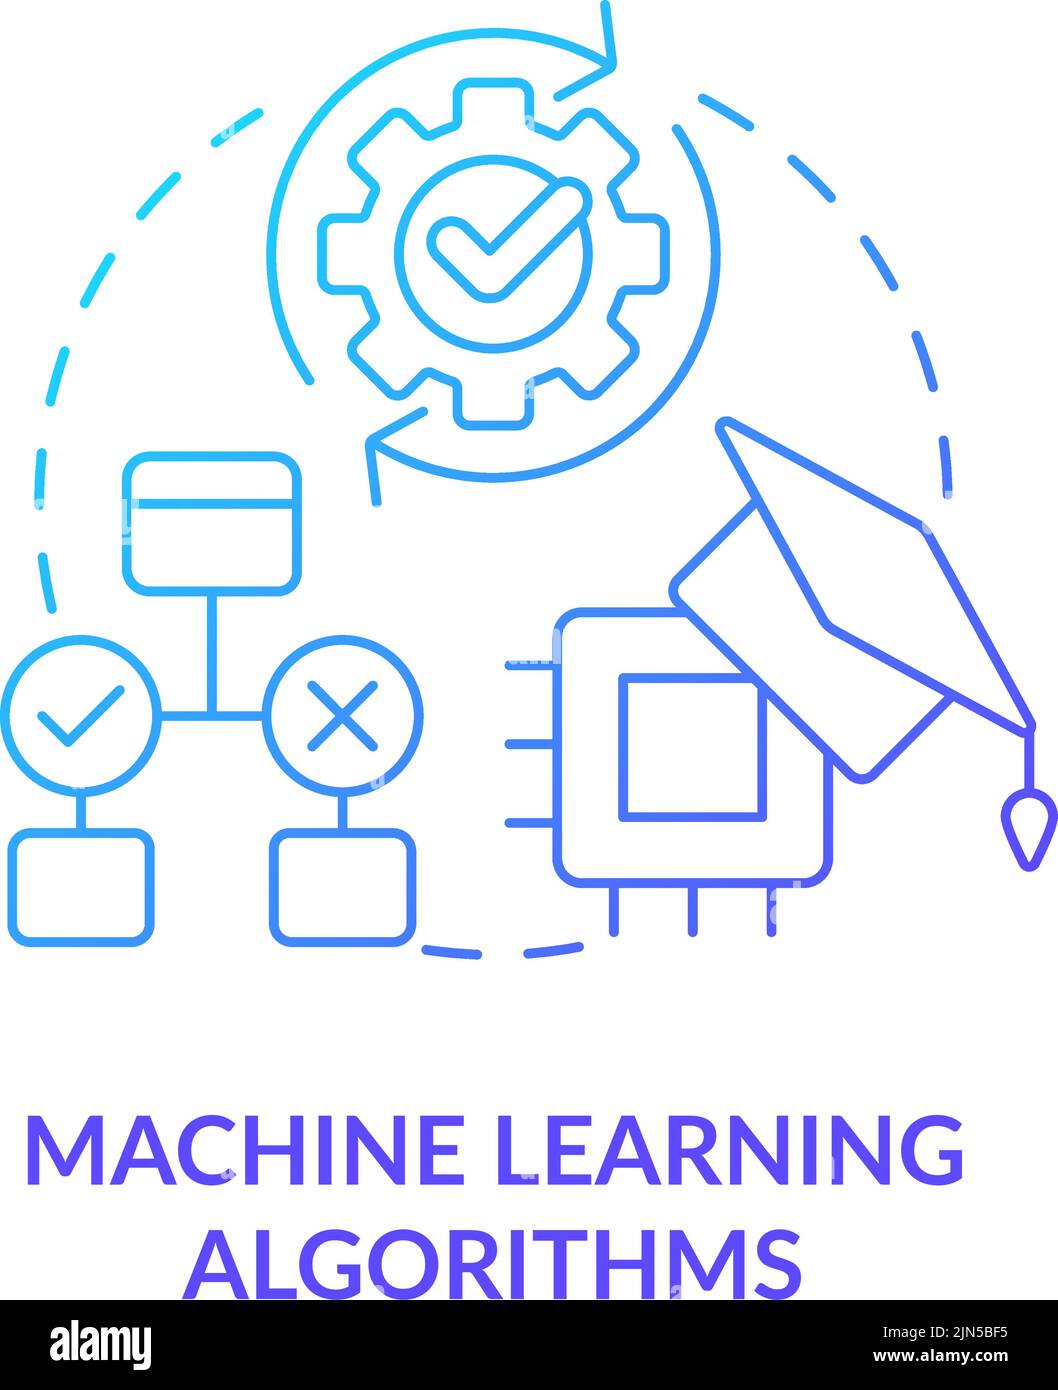 Machine learning algorithms blue gradient concept icon Stock Vector